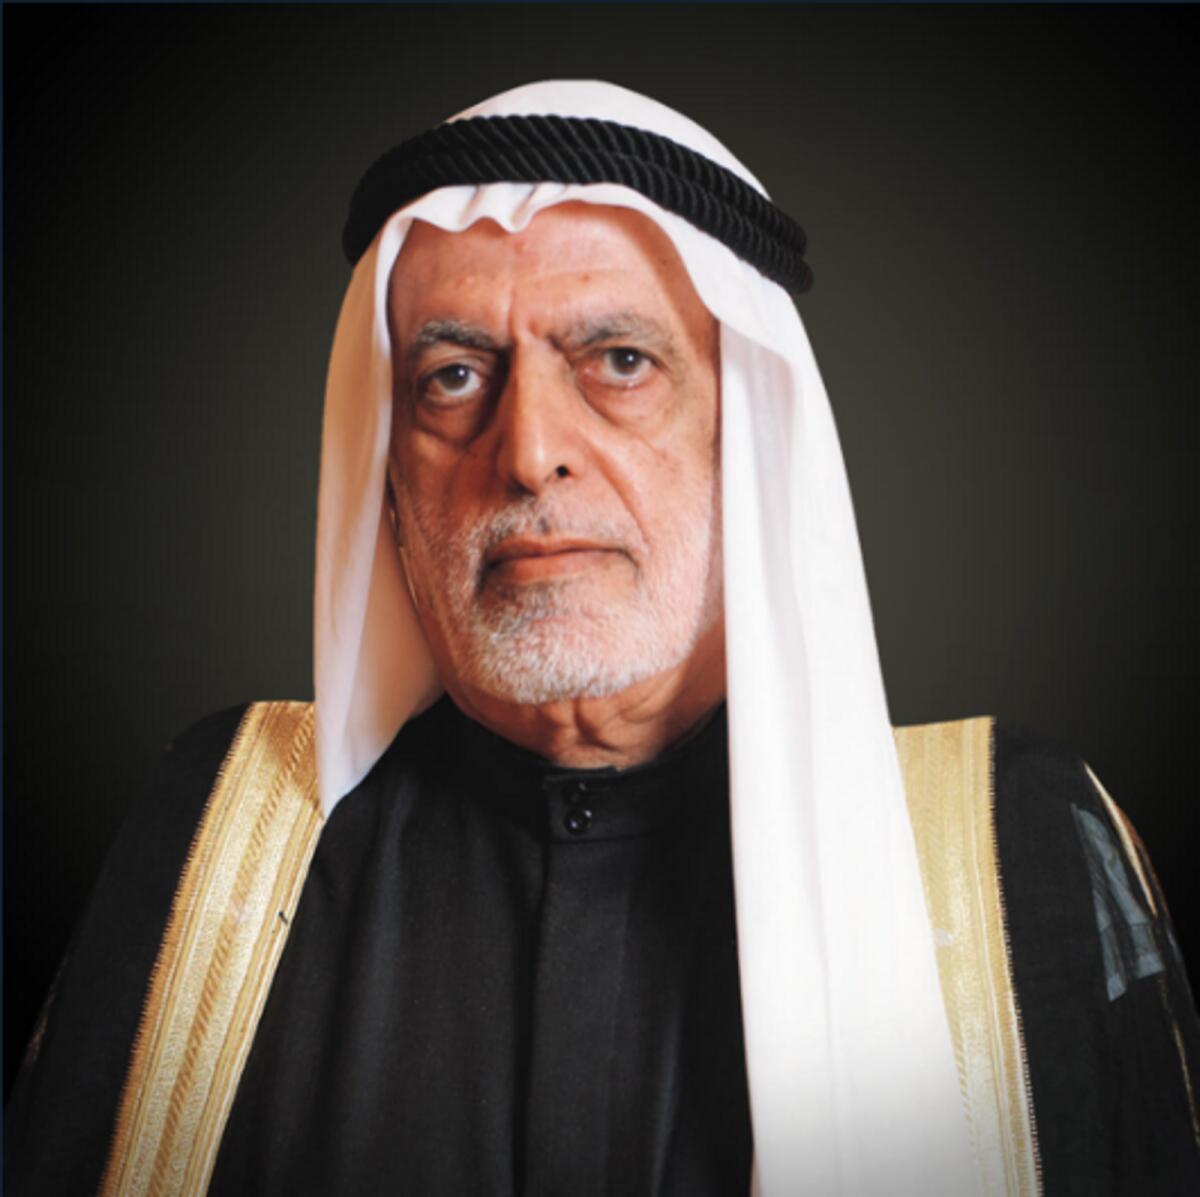 Abdulla bin Ahmad Al Ghurair